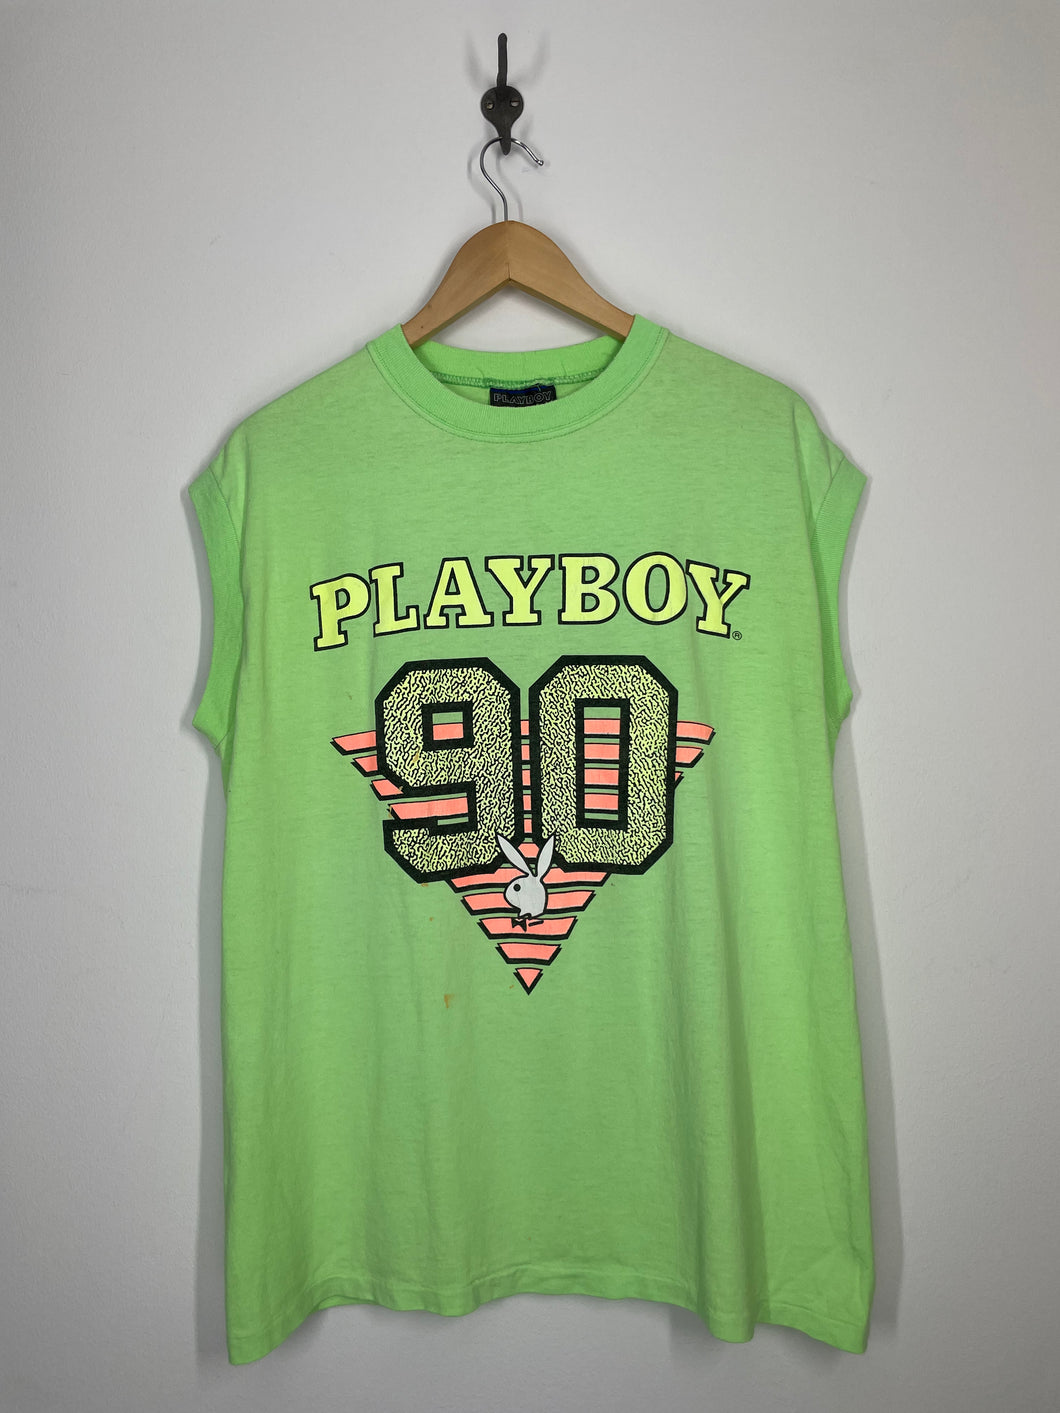 Playboy 1990 Graphic Sleeveless Shirt - XL